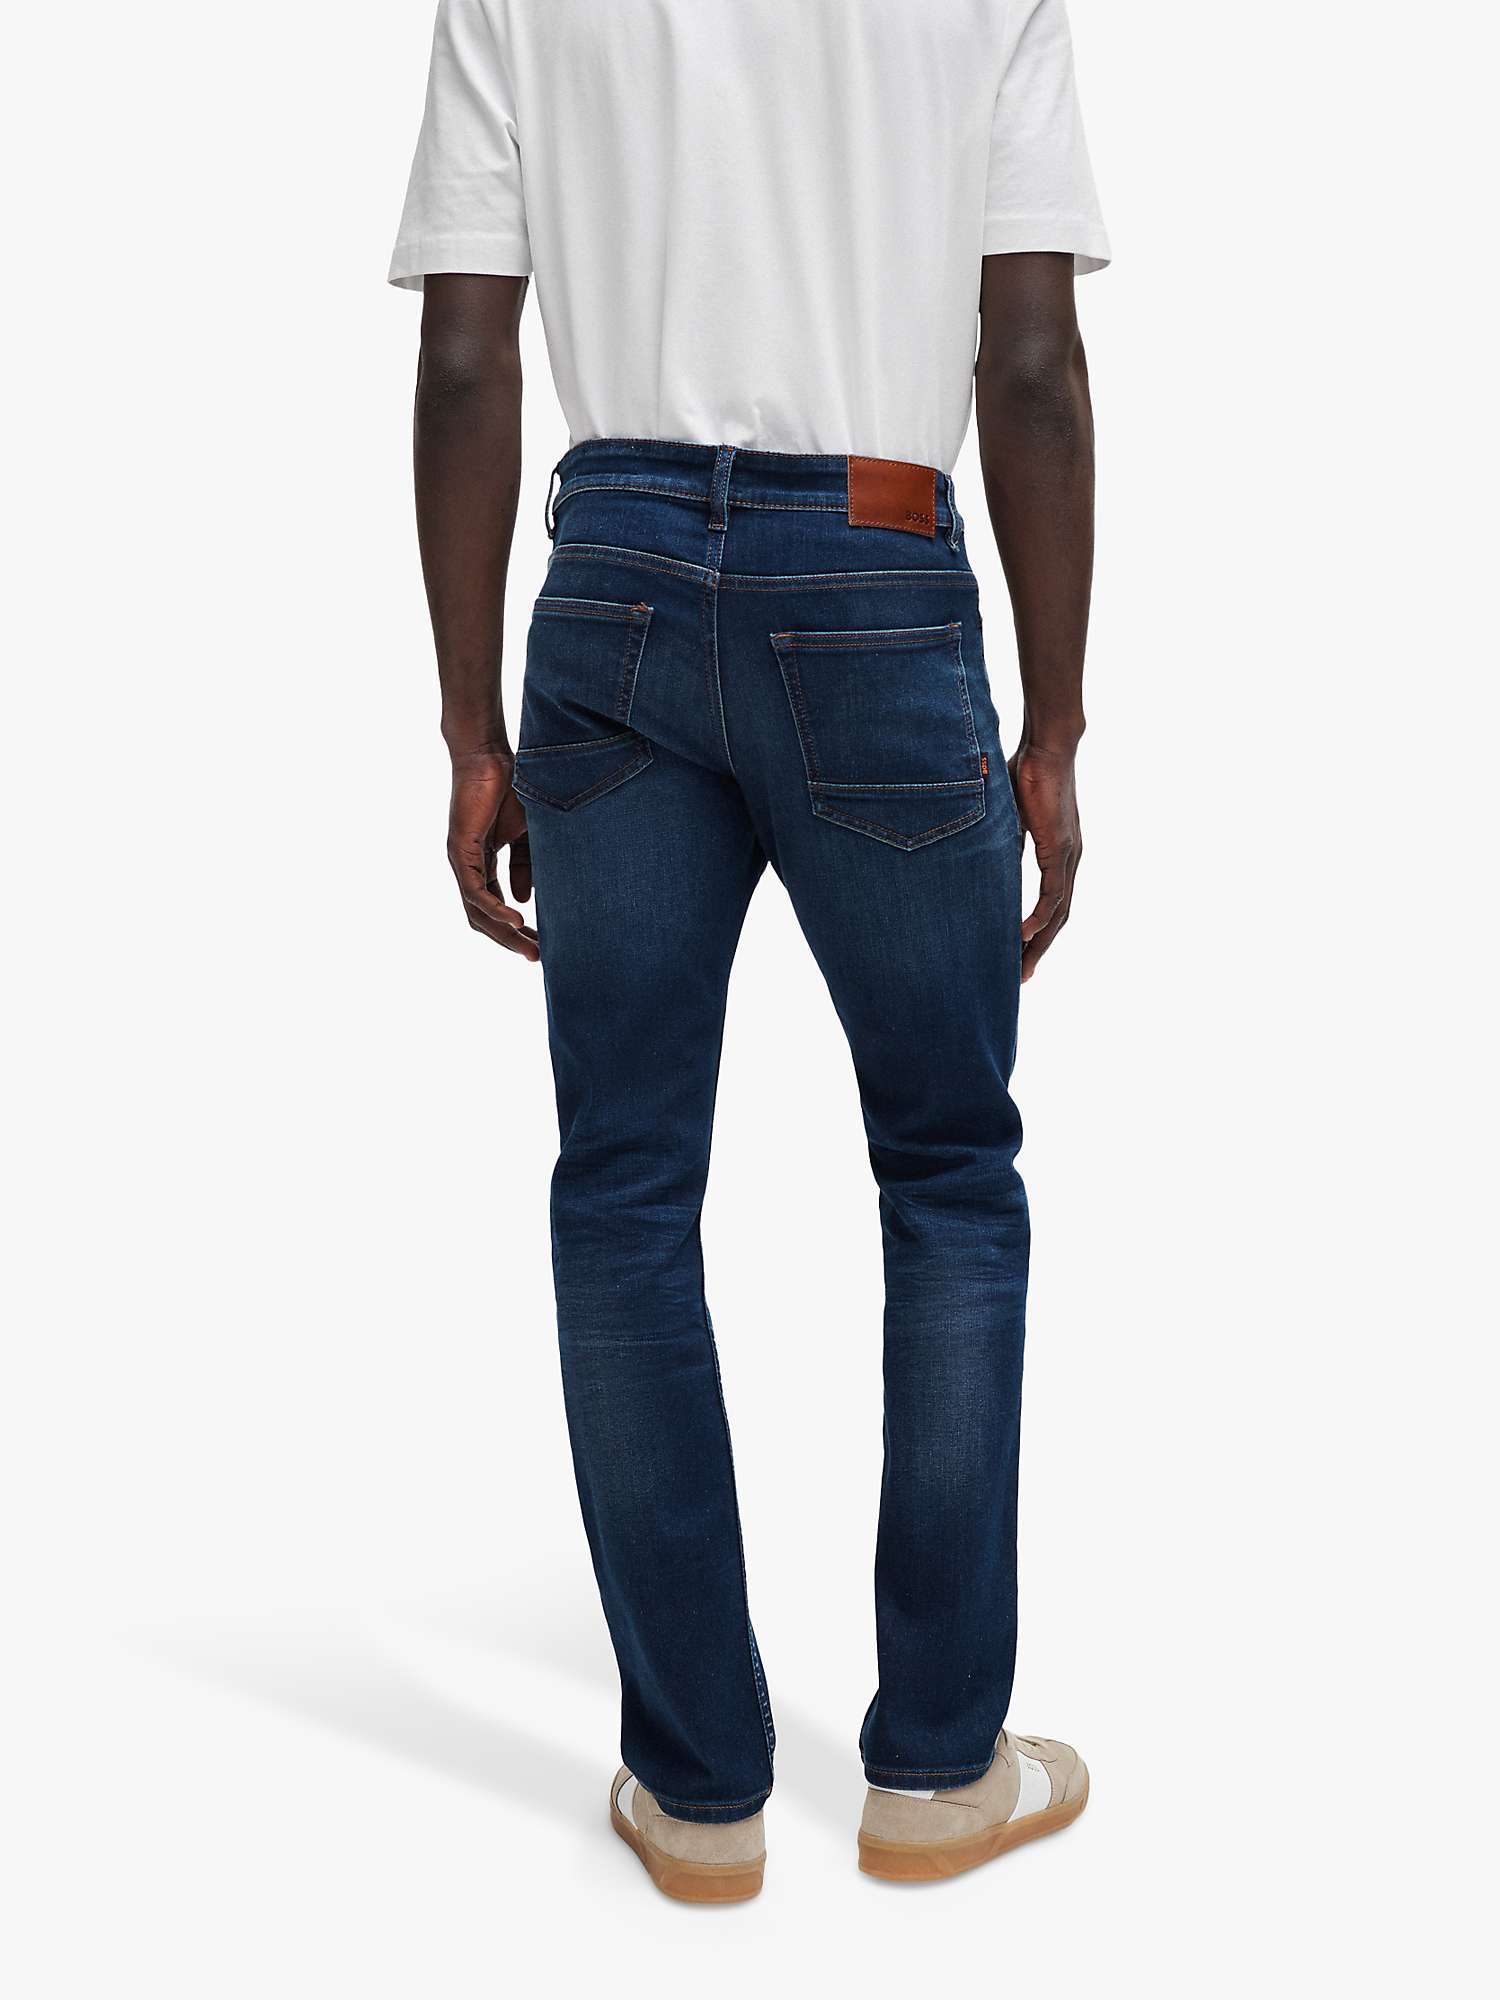 Buy BOSS Delaware Slim Fit Jeans, Navy Online at johnlewis.com